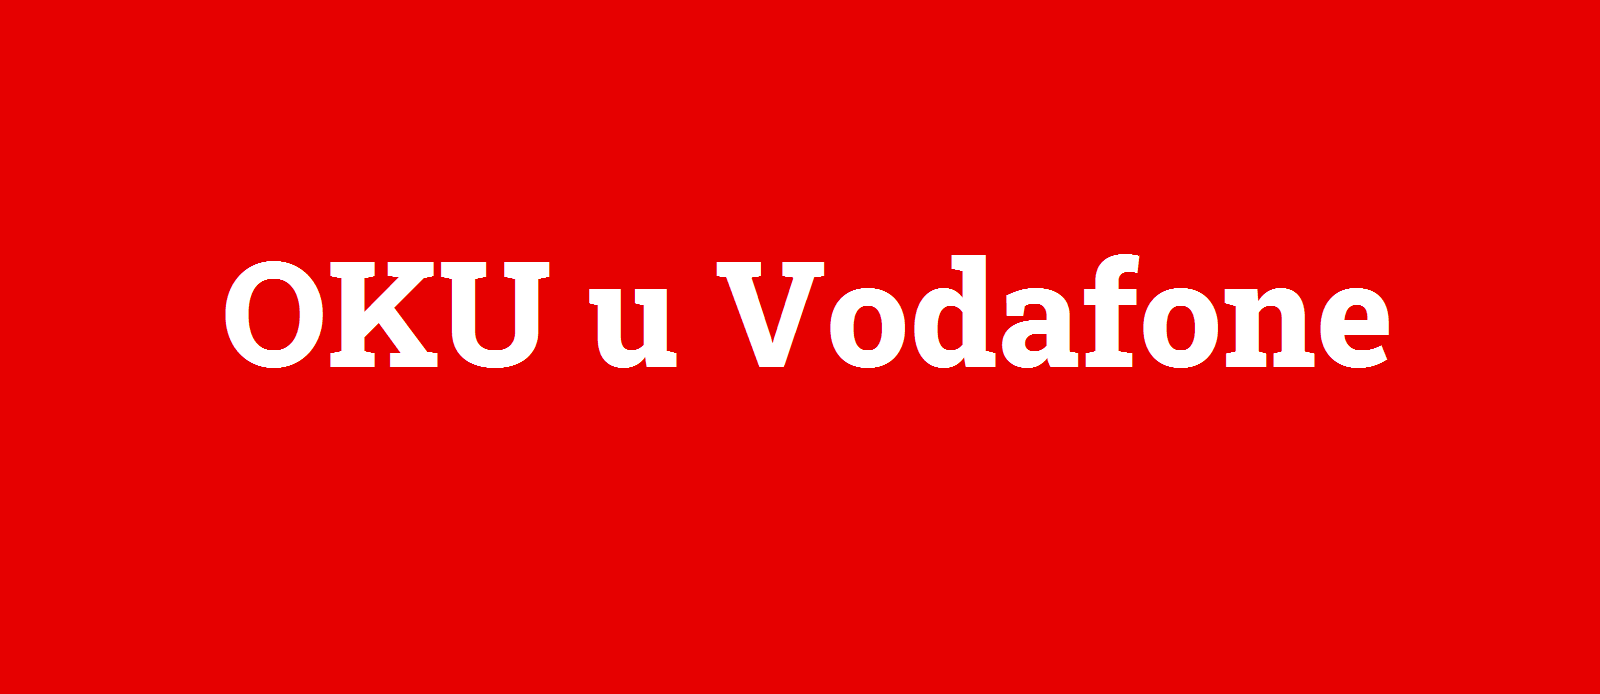 OKU u Vodafone 1.png